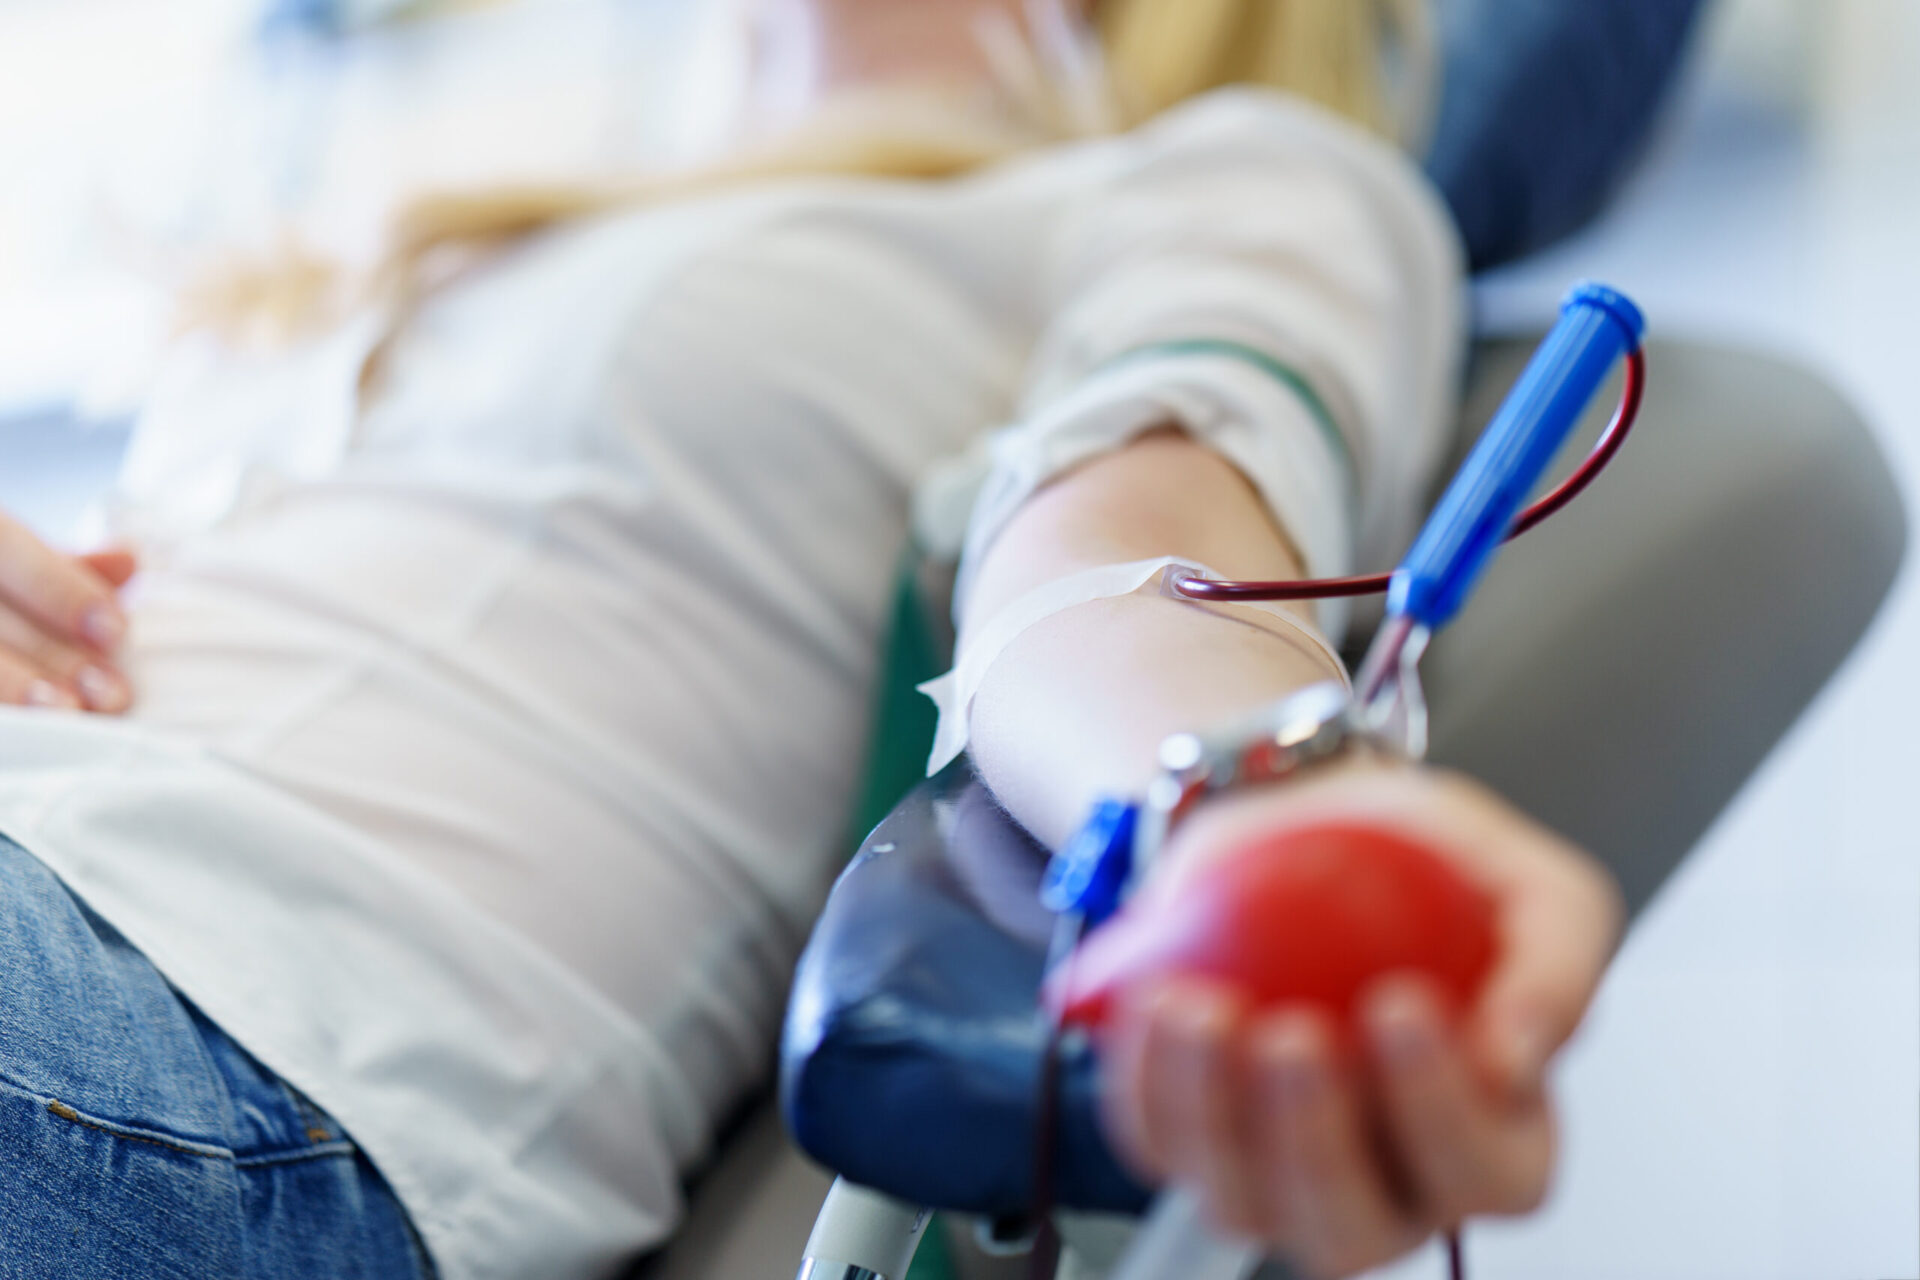 Dangerous Blood Shortages Continue as Blood Banks Seek Donors